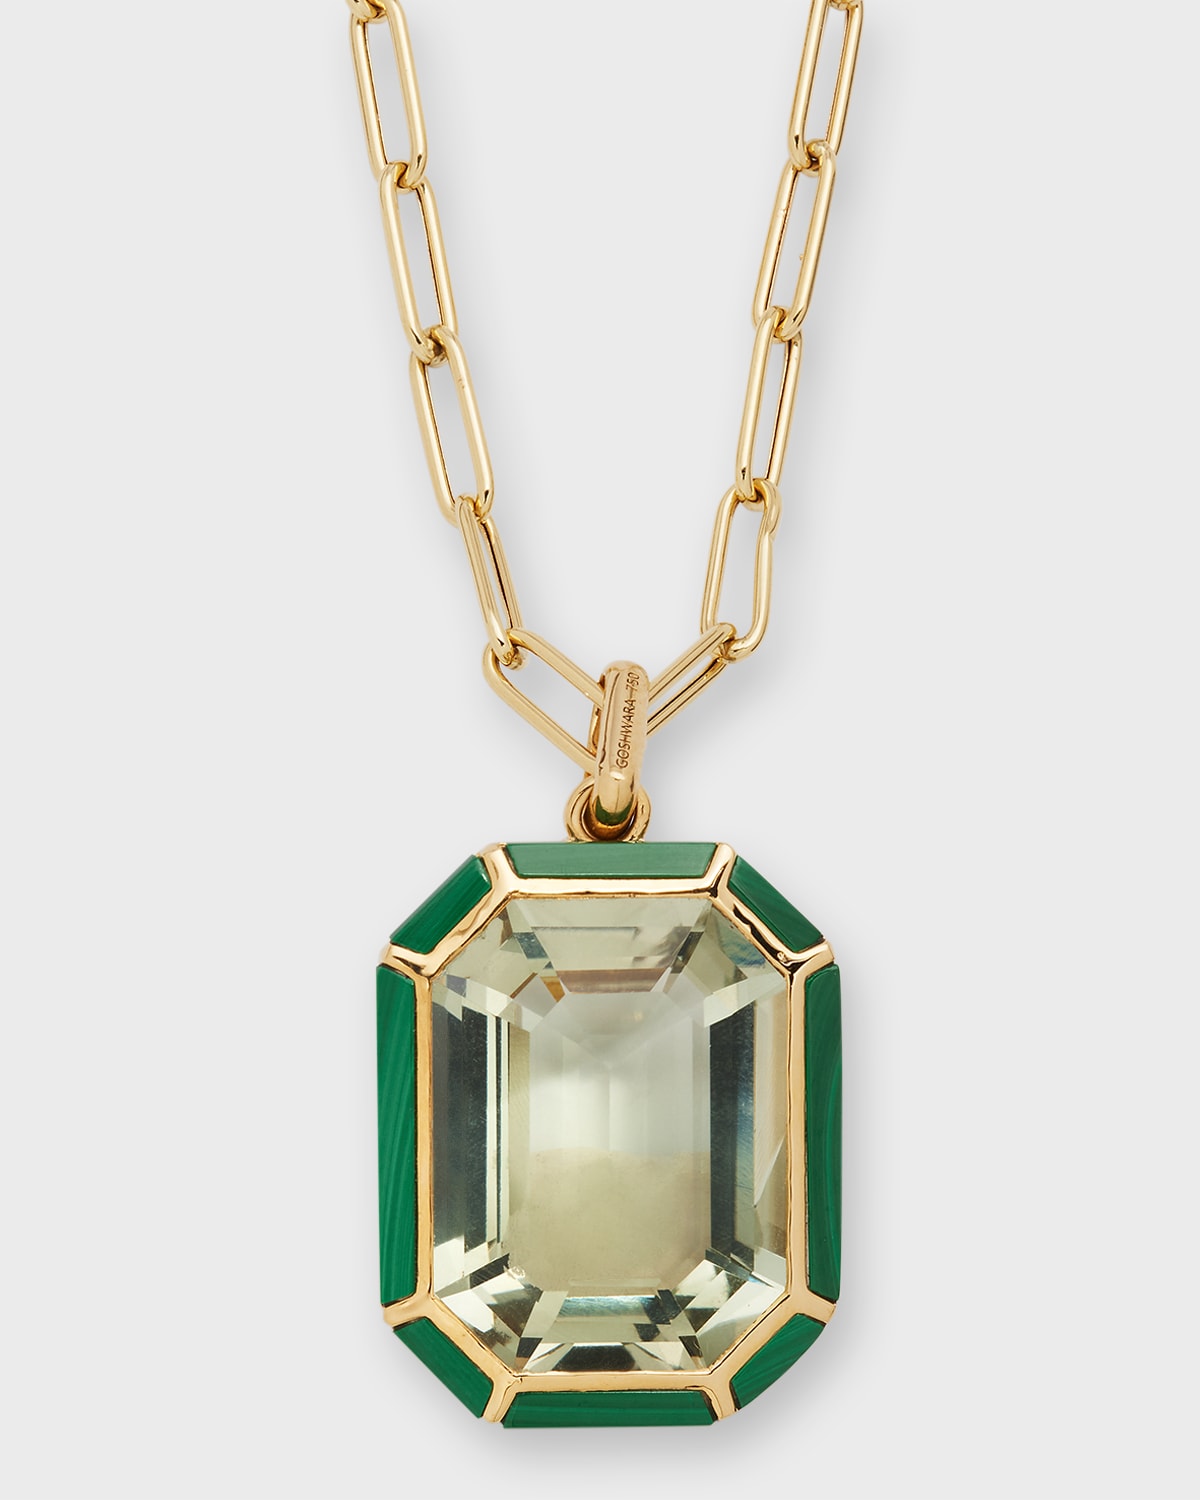 Goshwara 18k Gold Paperclip Chain Necklace with Emerald-Cut Prasiolite Pendant